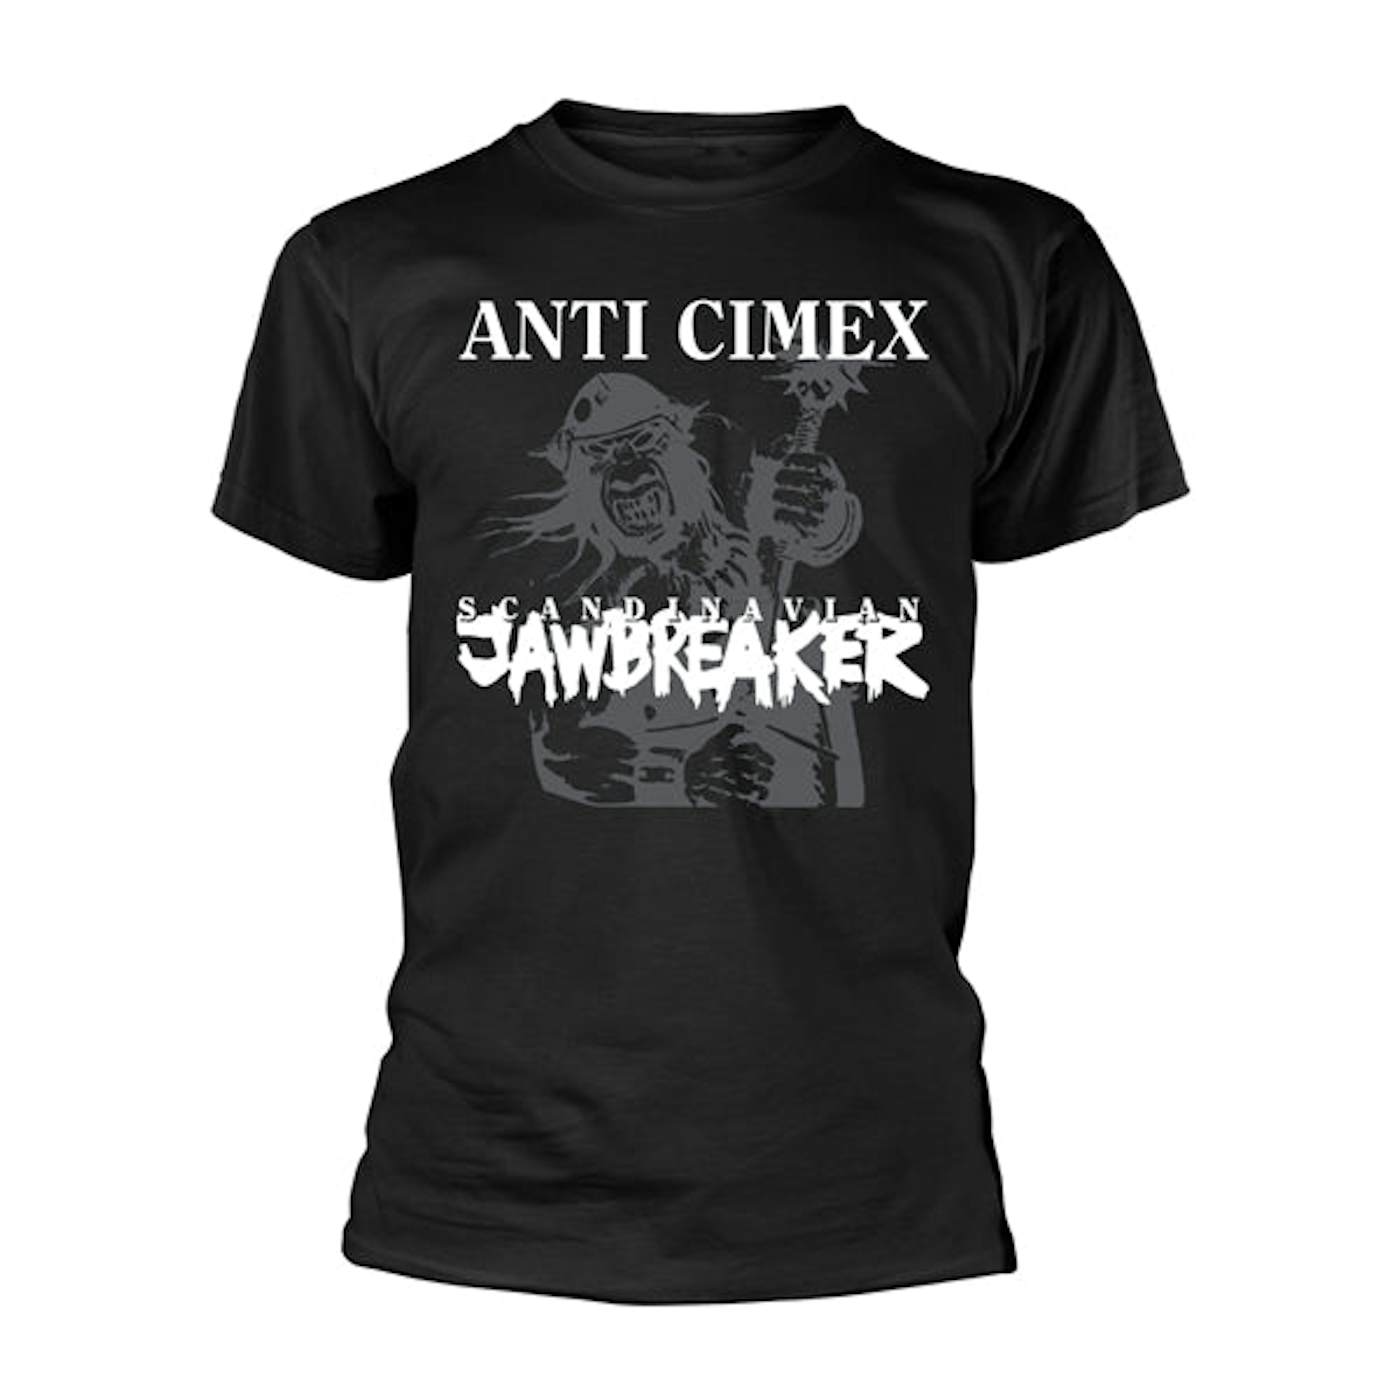 Anti Cimex T Shirt - Scandinavian Jawbreaker